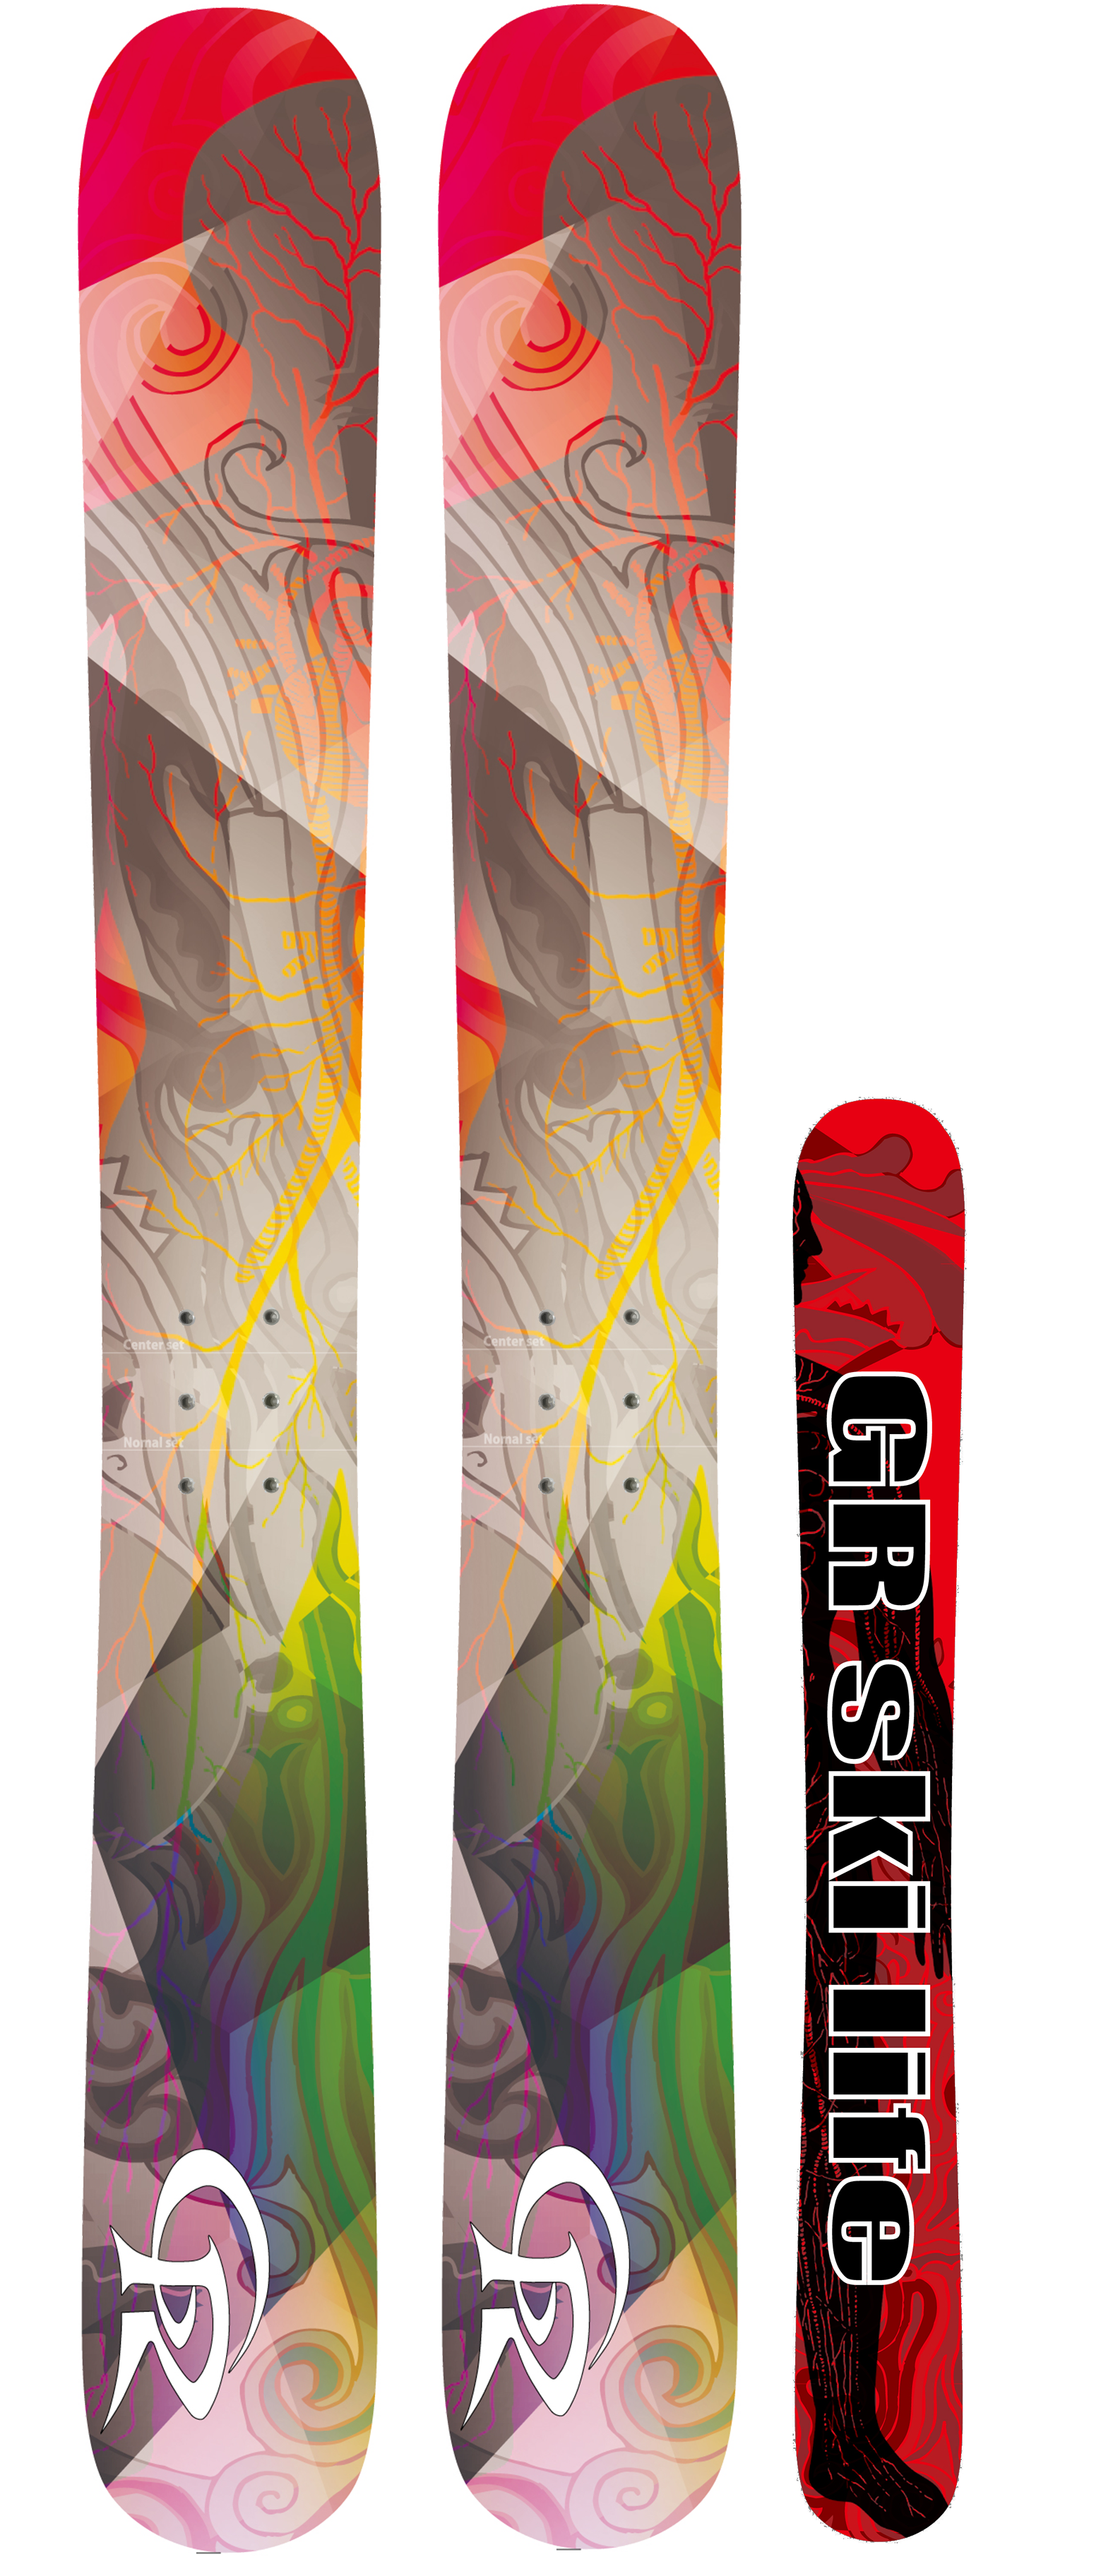 OverDose / オーバードーズ | スキーボード専門ブランド「GR ski life」